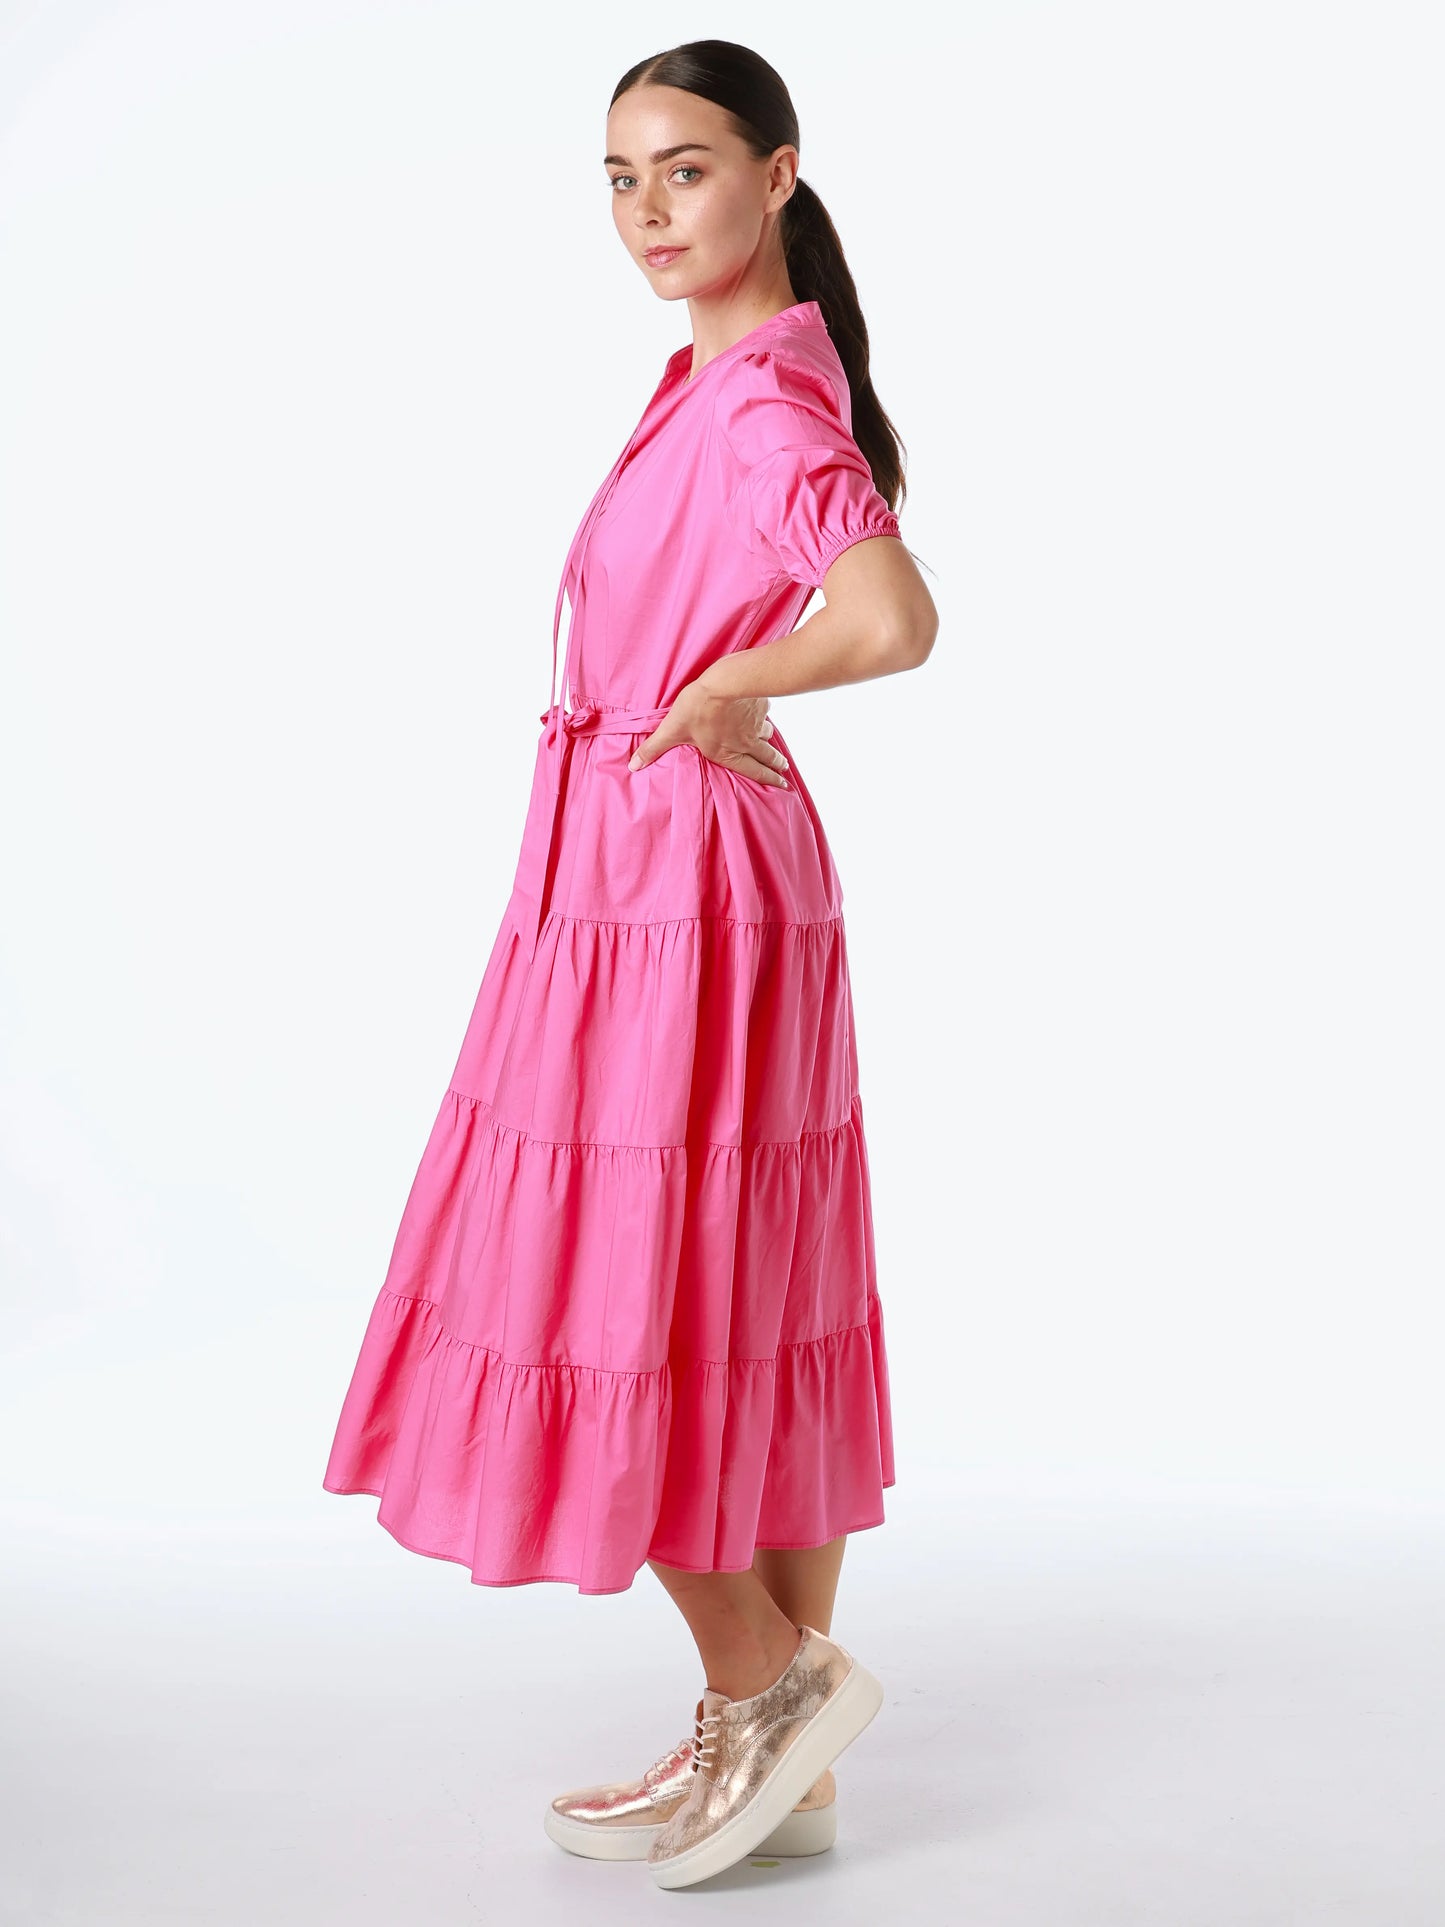 Liberty Rose Hot Pink Cotton Tiered Dress